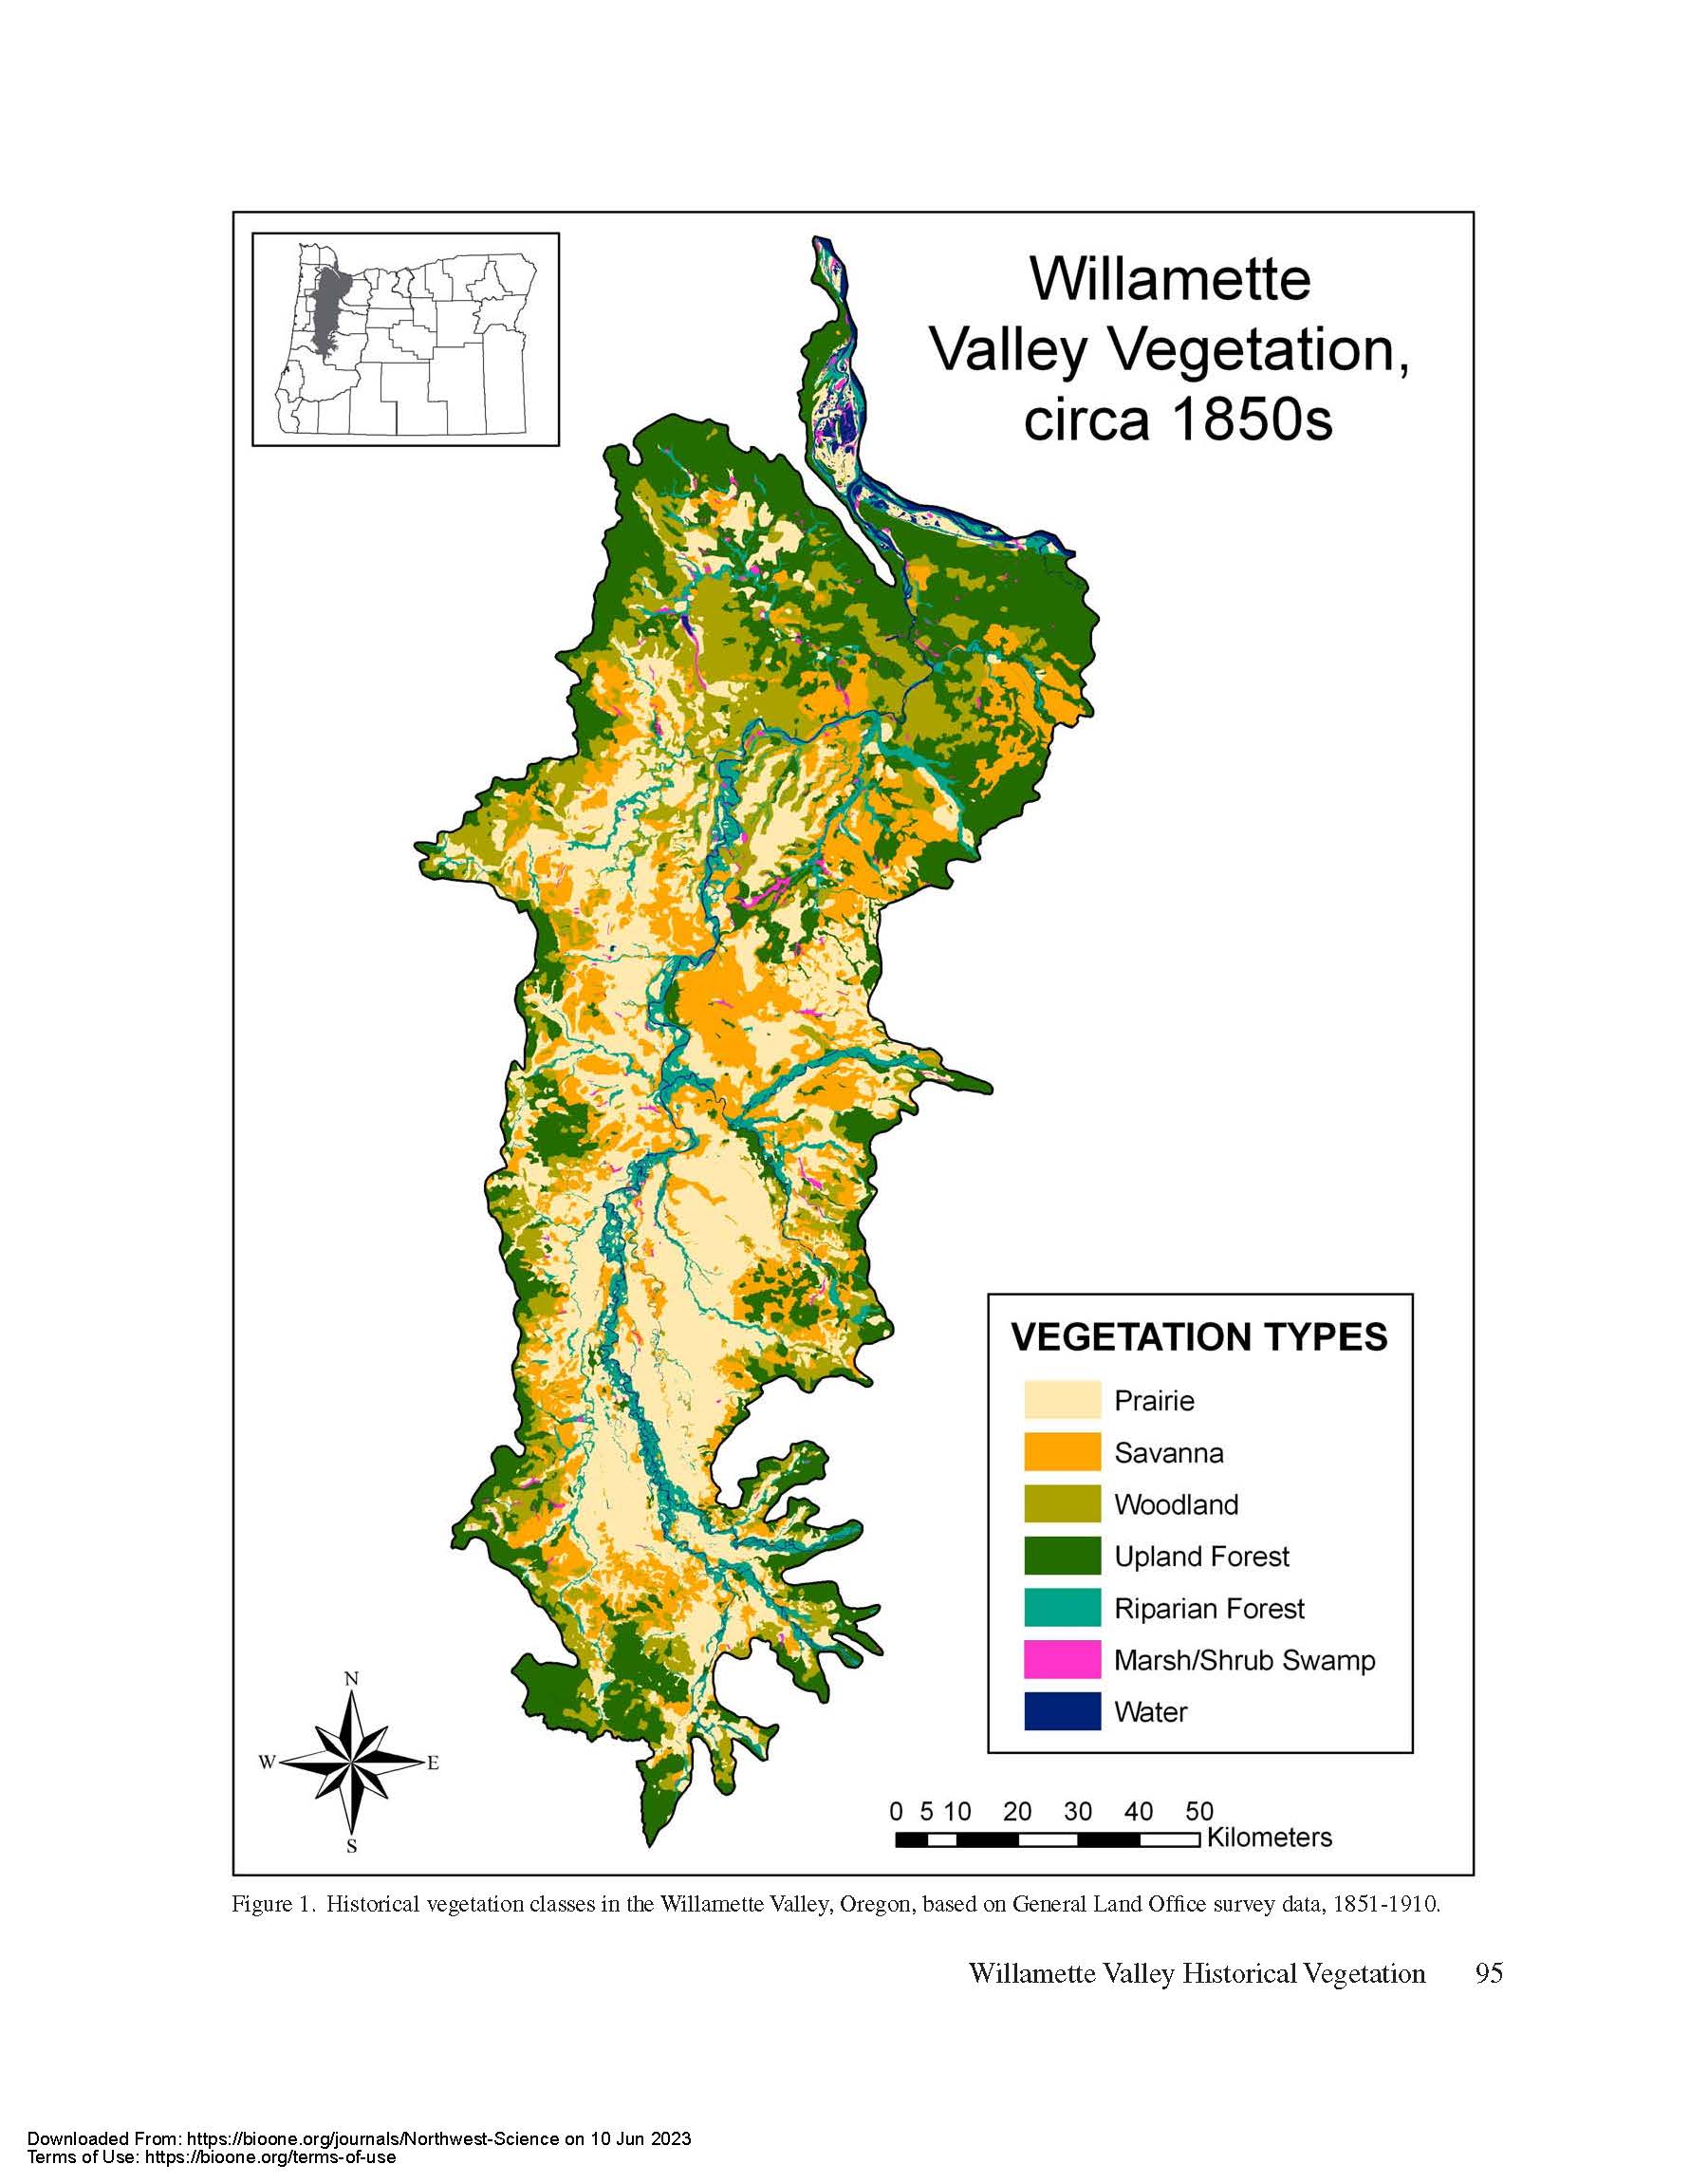 Historical vegetation of Williamette Valley